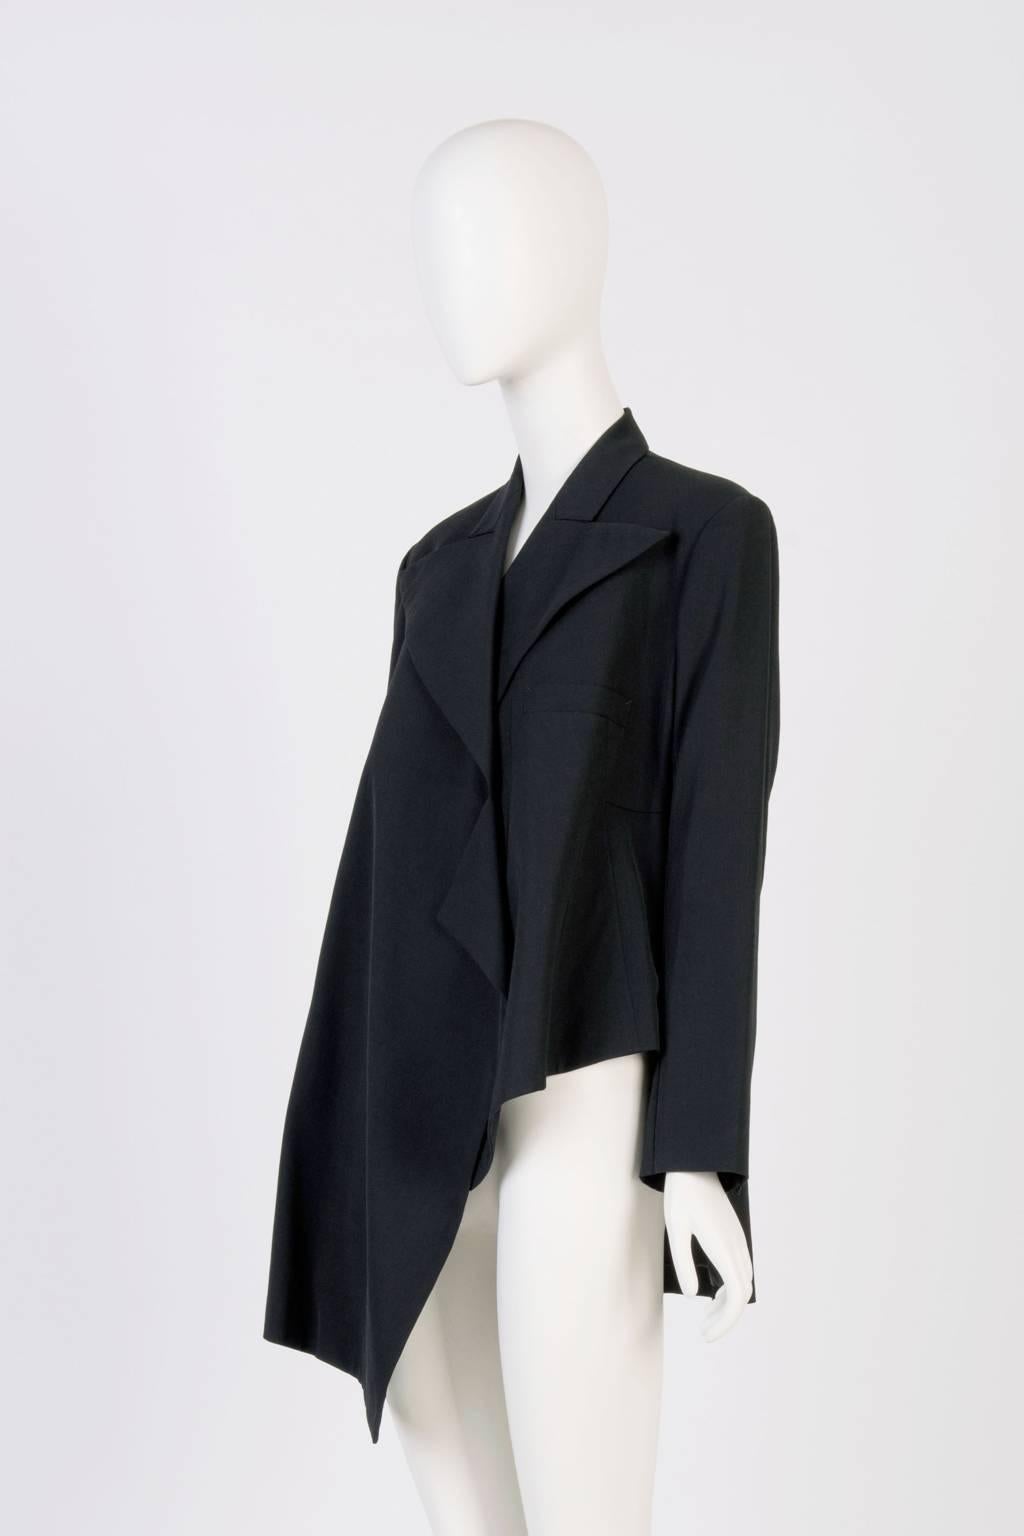 Yohji Yamamoto wool blazer featuring asymmetrical front panels with waterfall like collar. Padded shoulder. Fully lined.